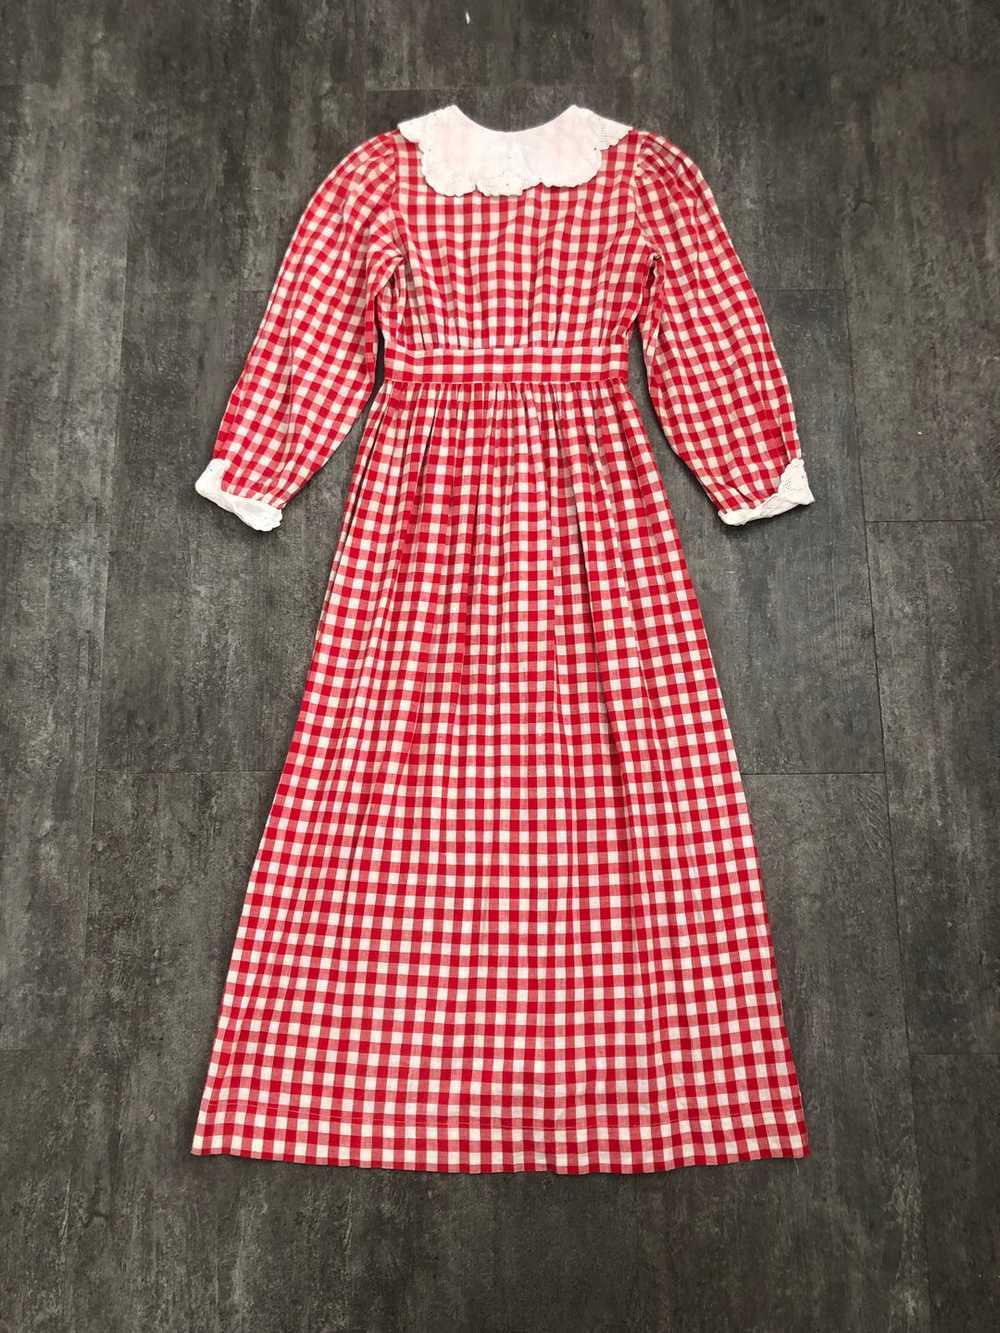 Antique Edwardian dress . vintage red and white g… - image 4